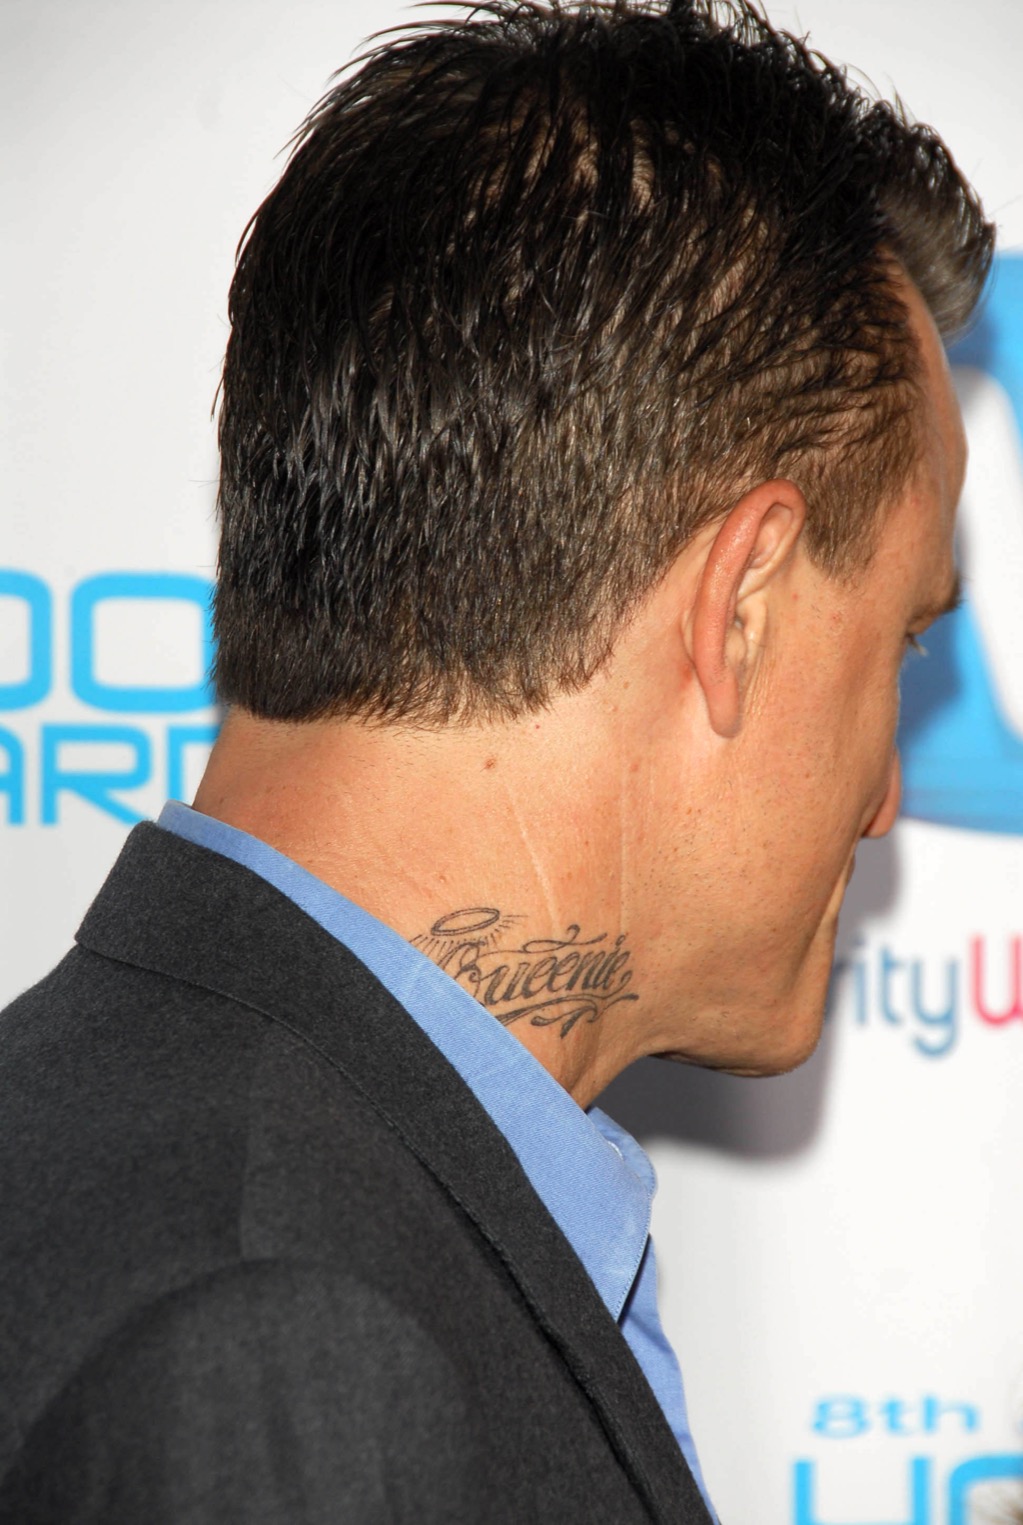 30 Worst Celebrity Tattoos